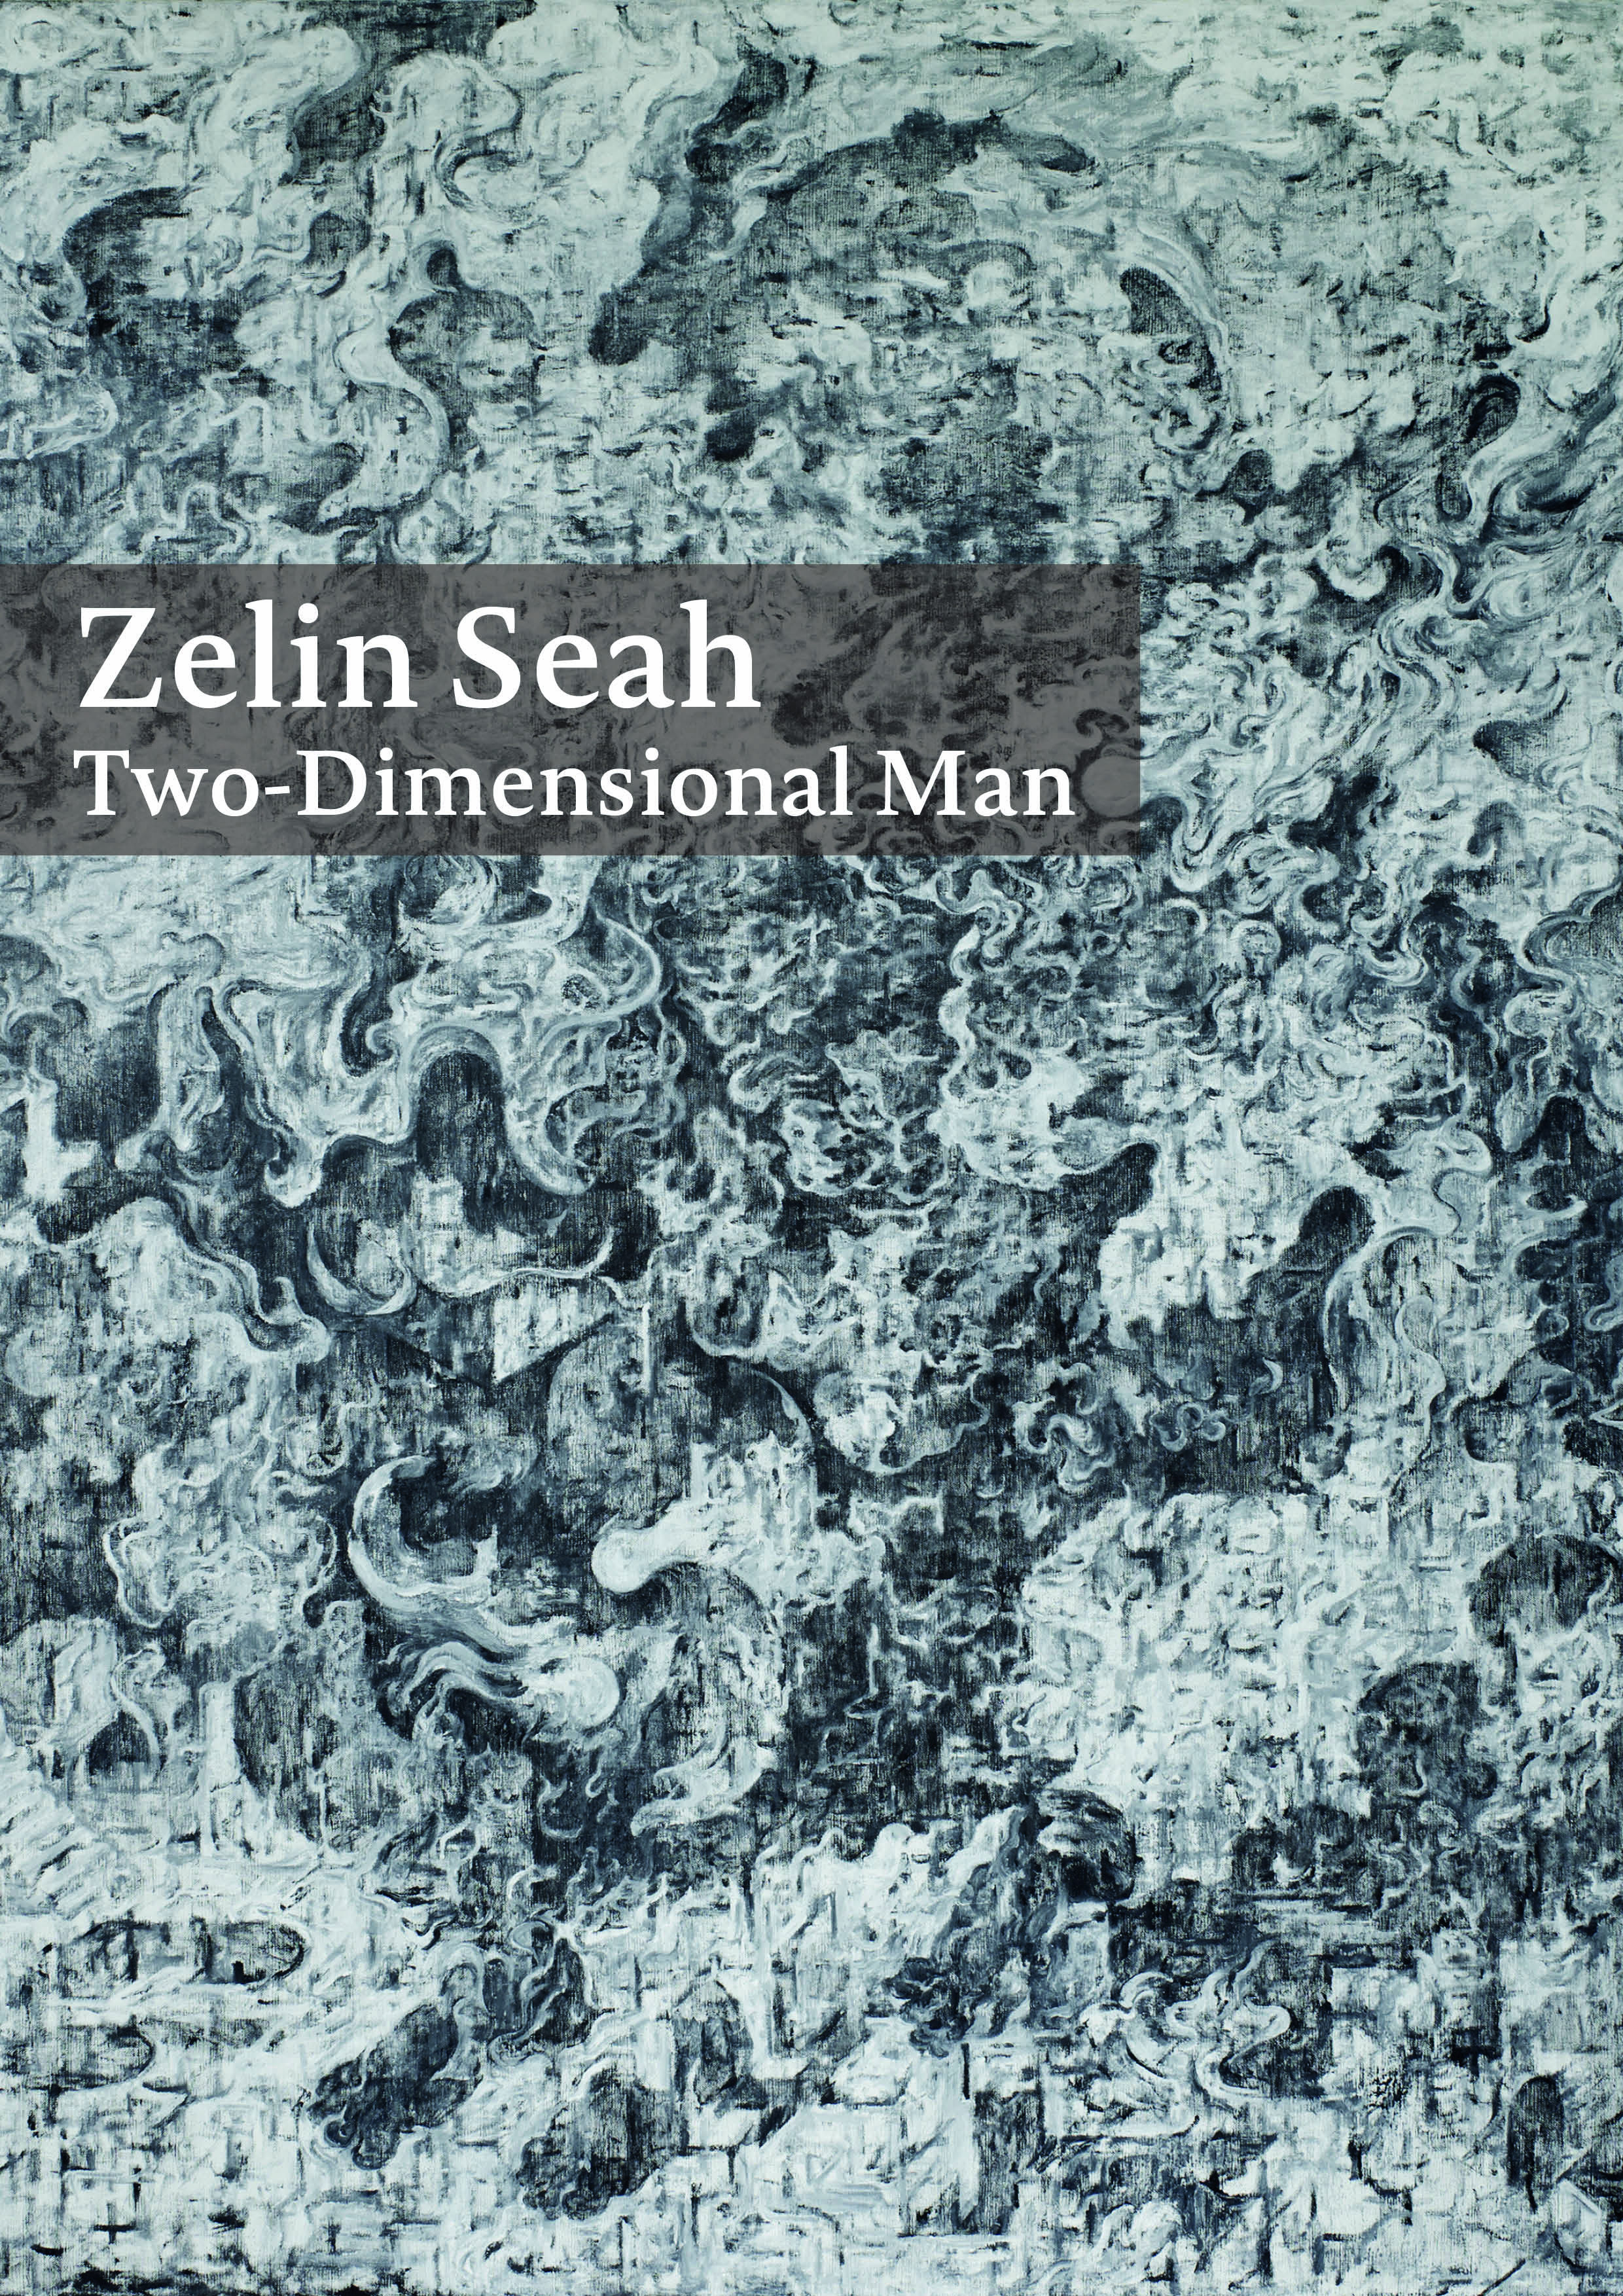 Zelin Seah – Two-Dimensional Man